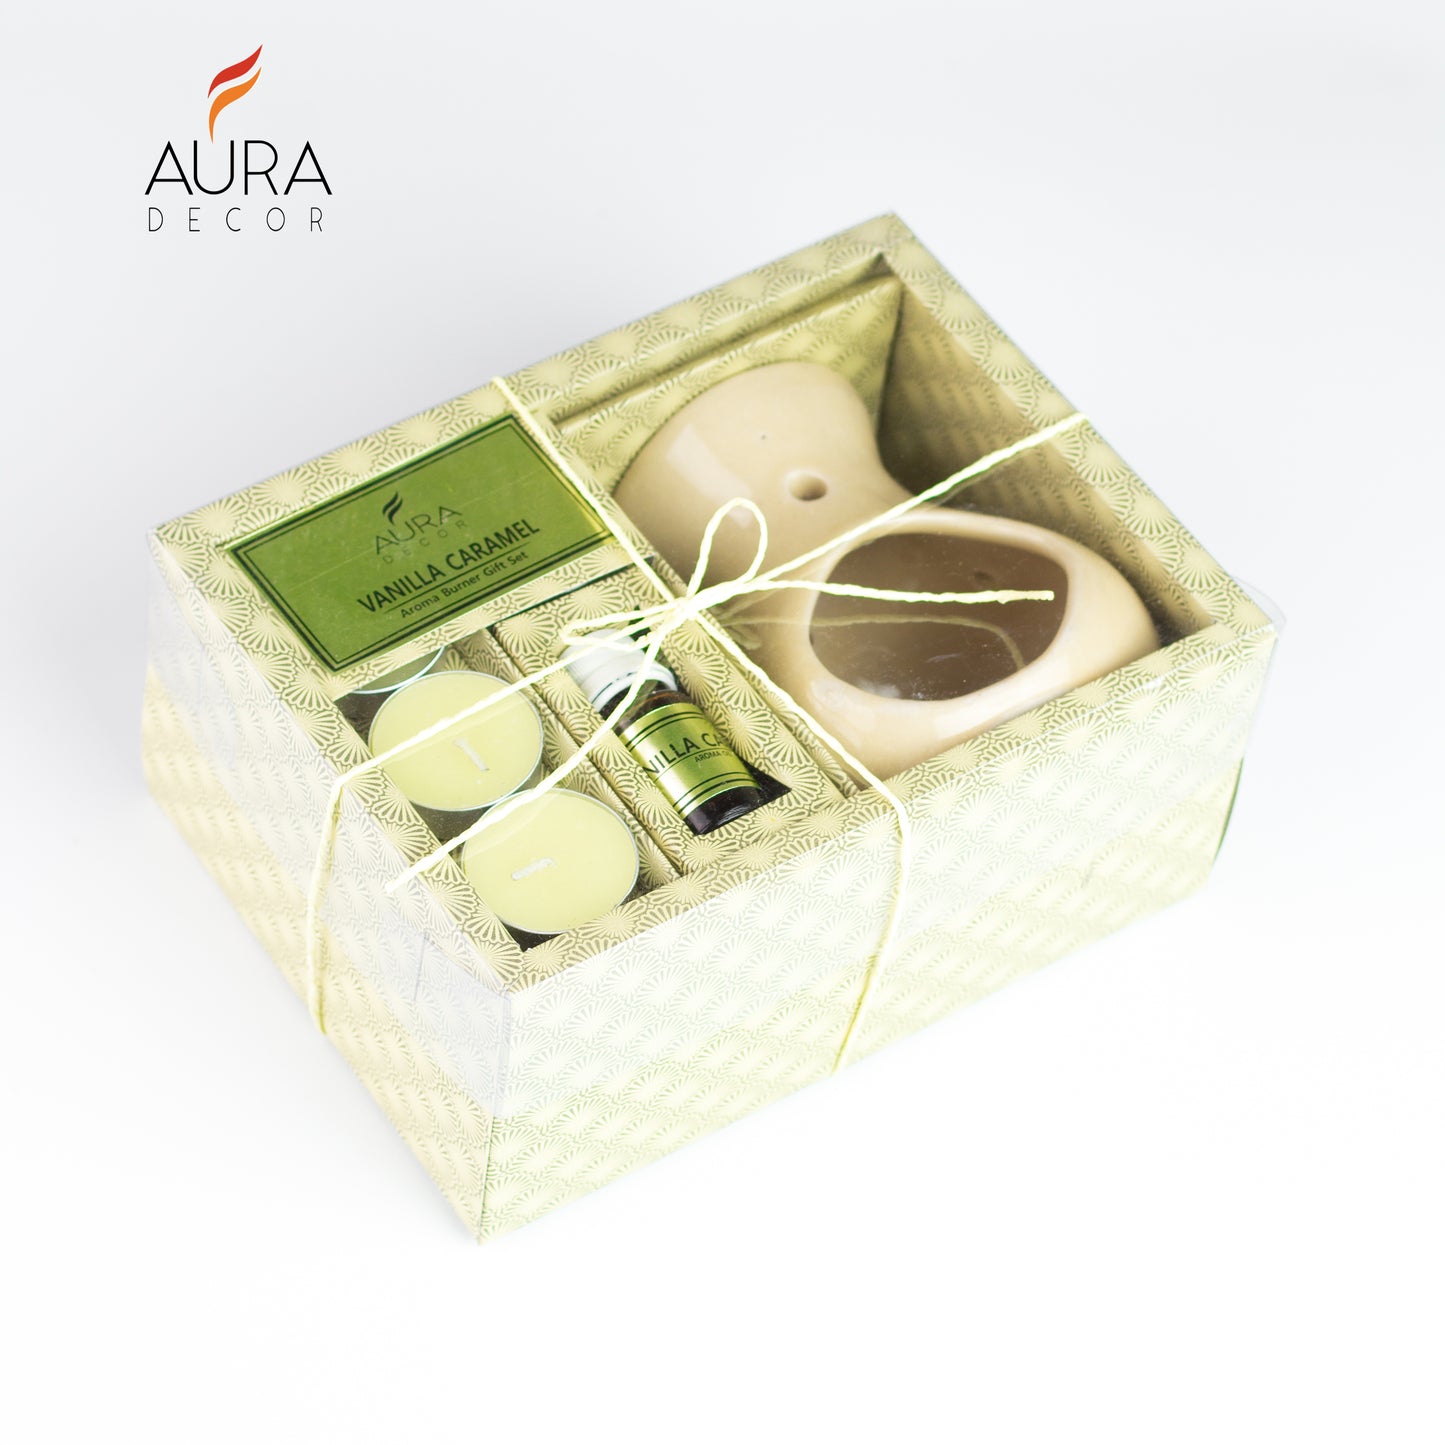 AuraDecor Aroma Diffuser Gift Set Vanilla ( Large )